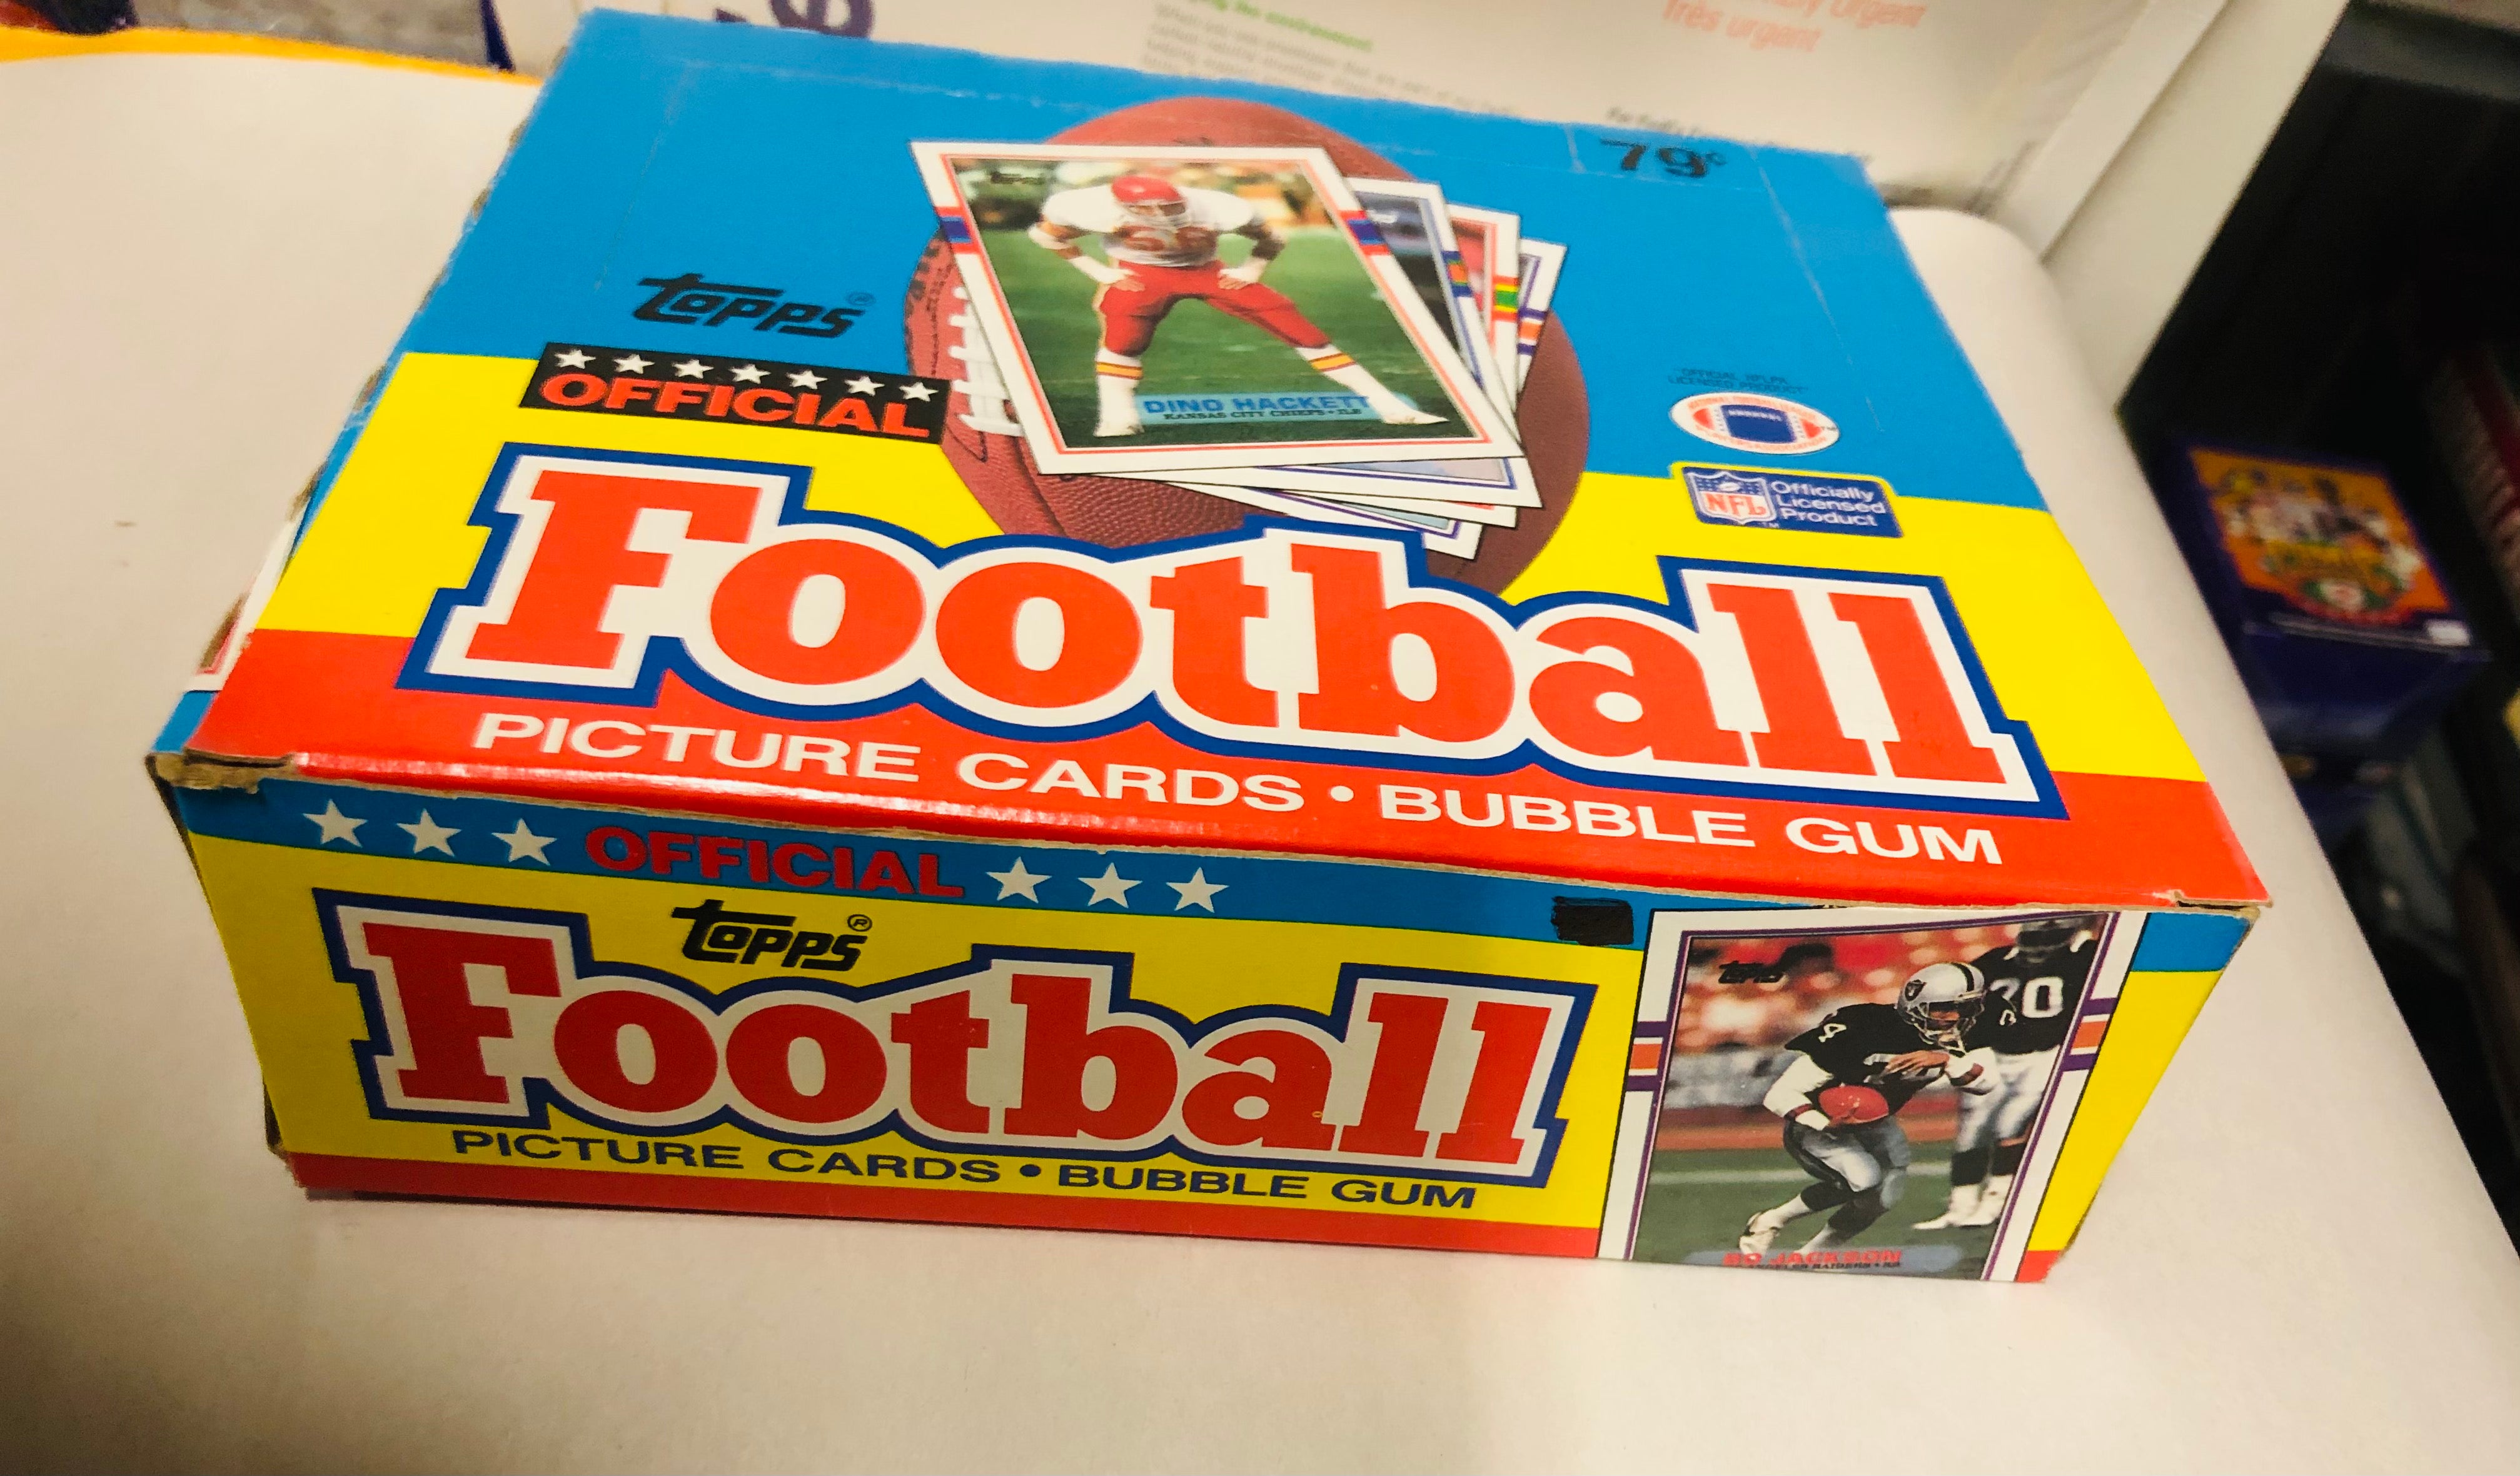 1989 Topps football card Cello jumbo wrapped 24 packs box